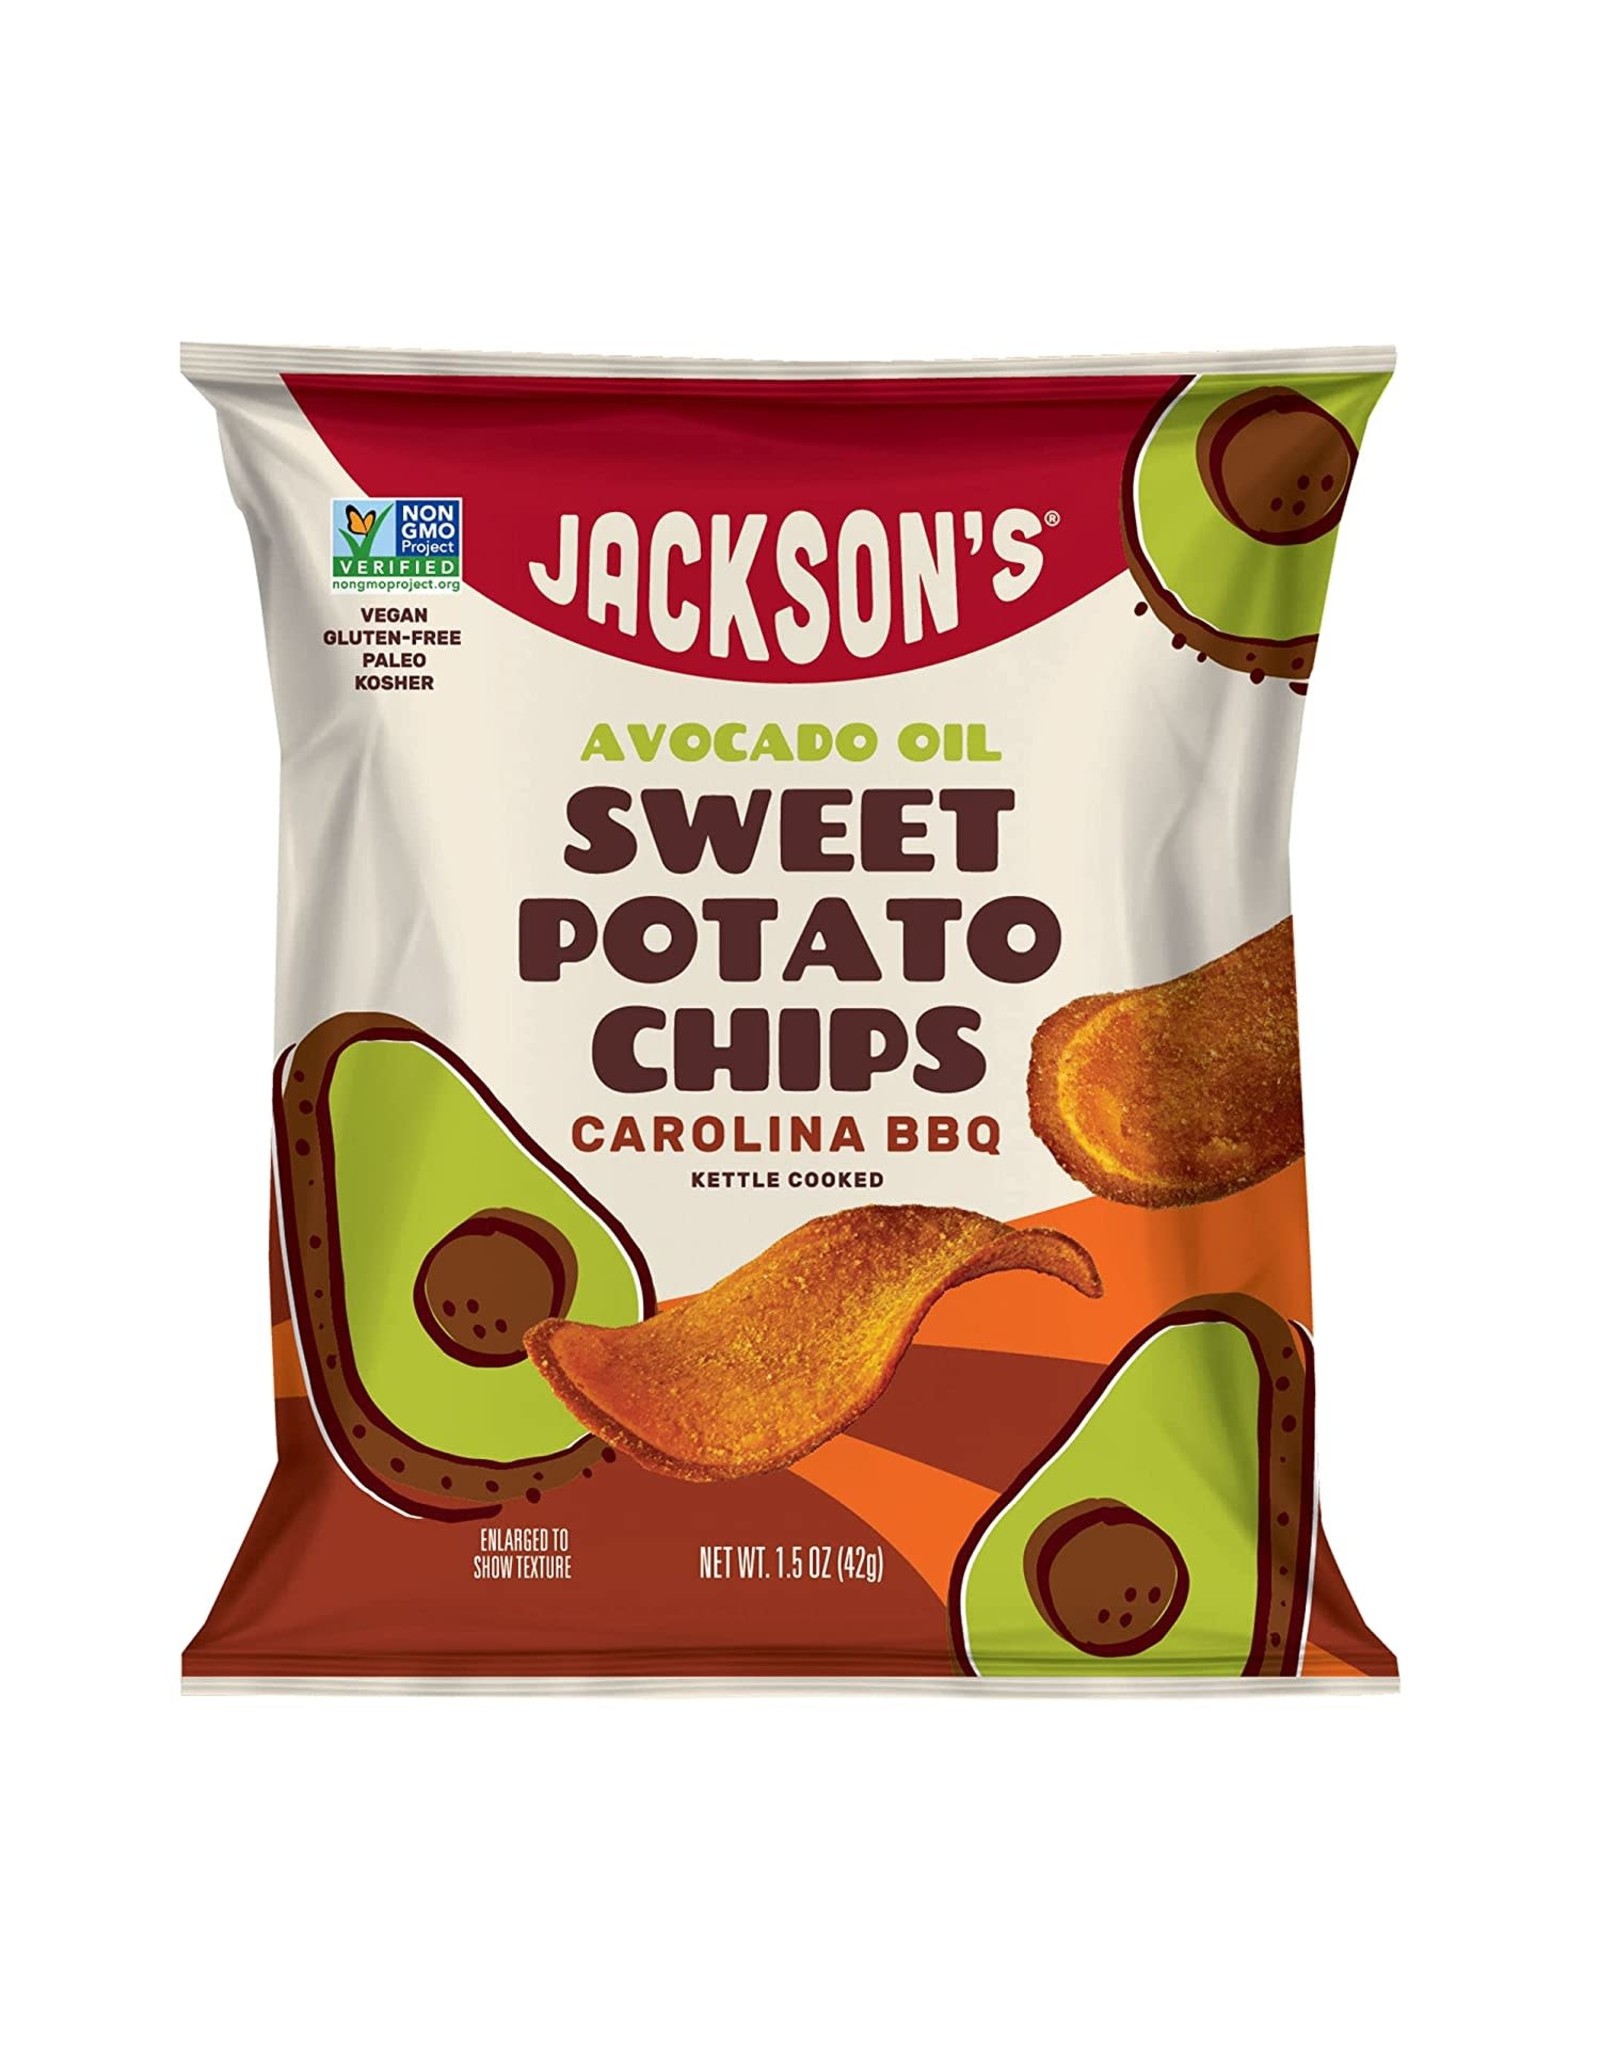 Jacksons Sweet Potato Chips